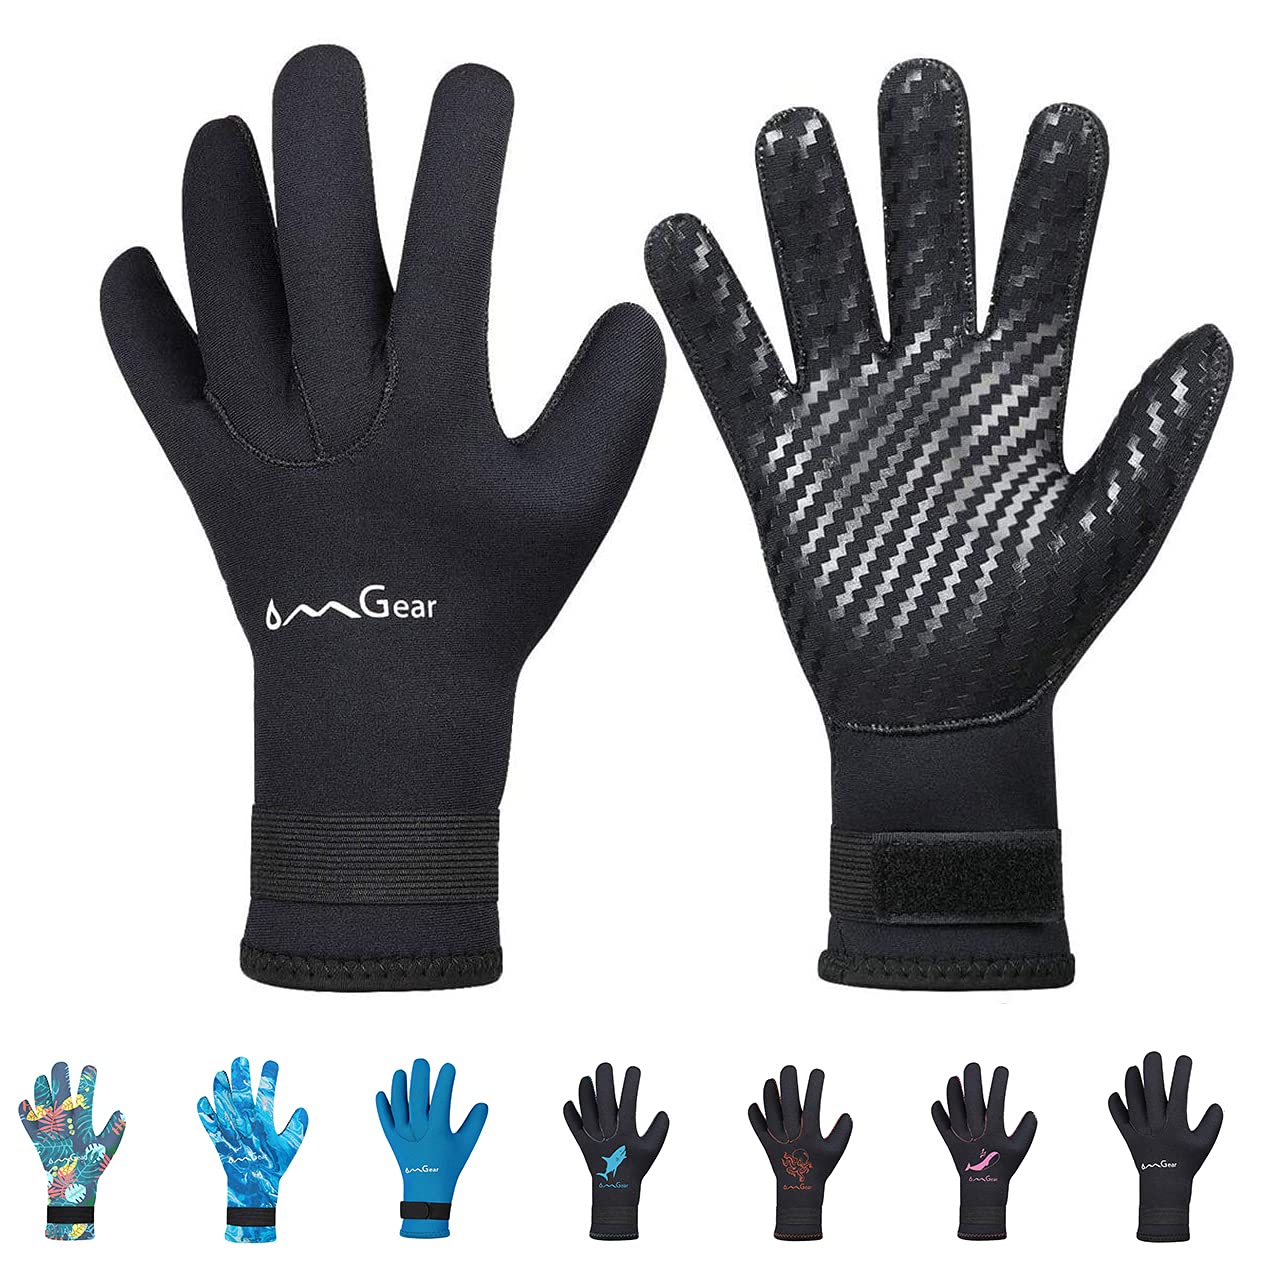 OMGear Neoprene Gloves Diving Wetsuit Gloves 3mm Flexible Thermal